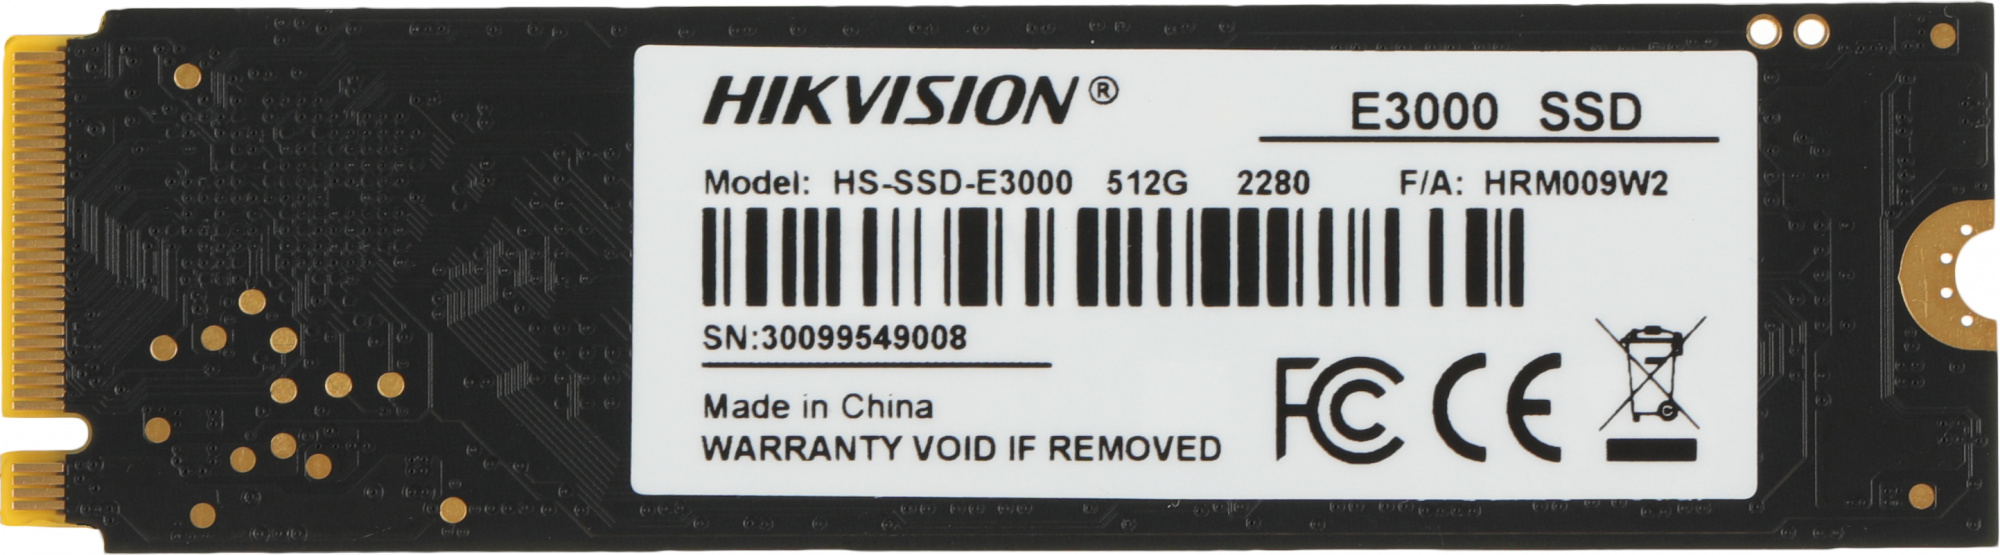 SSD  Hikvision E3000 HS-SSD-E3000/512G Hiksemi 512, M.2 2280, PCIe 3.0 x4,  M.2